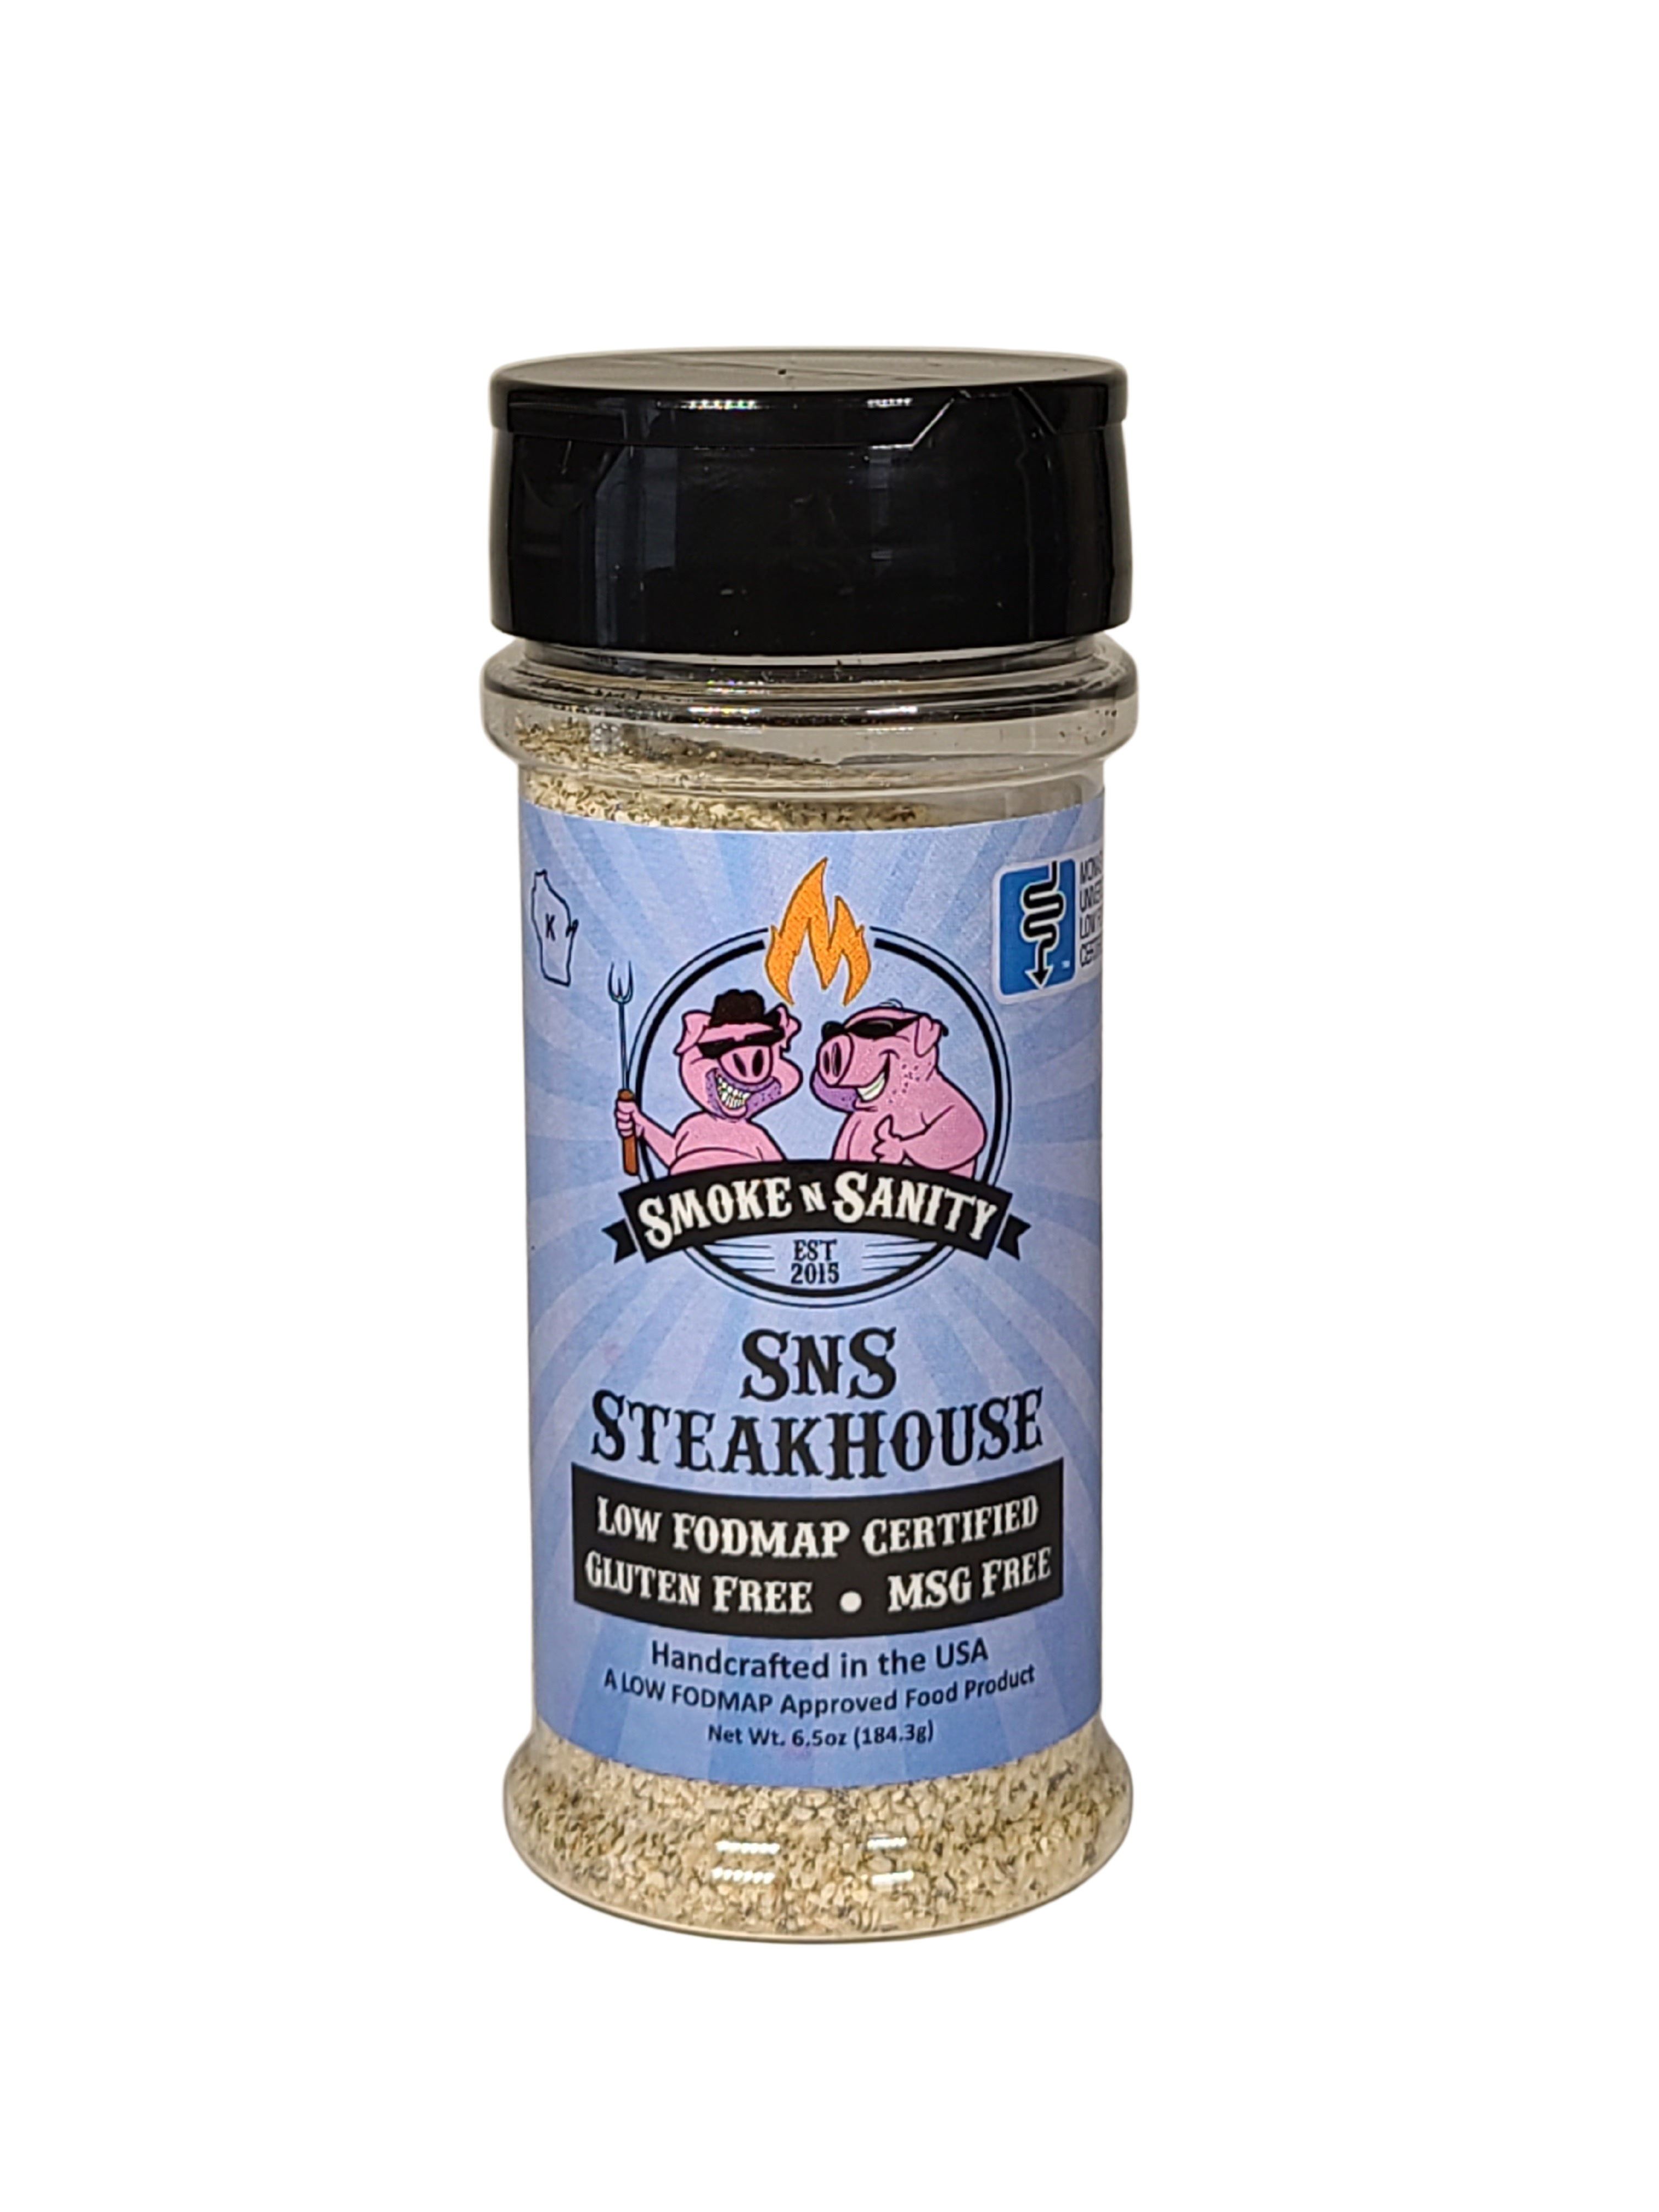 SnS Chili Seasoning  Smoke 'n Sanity, LLC